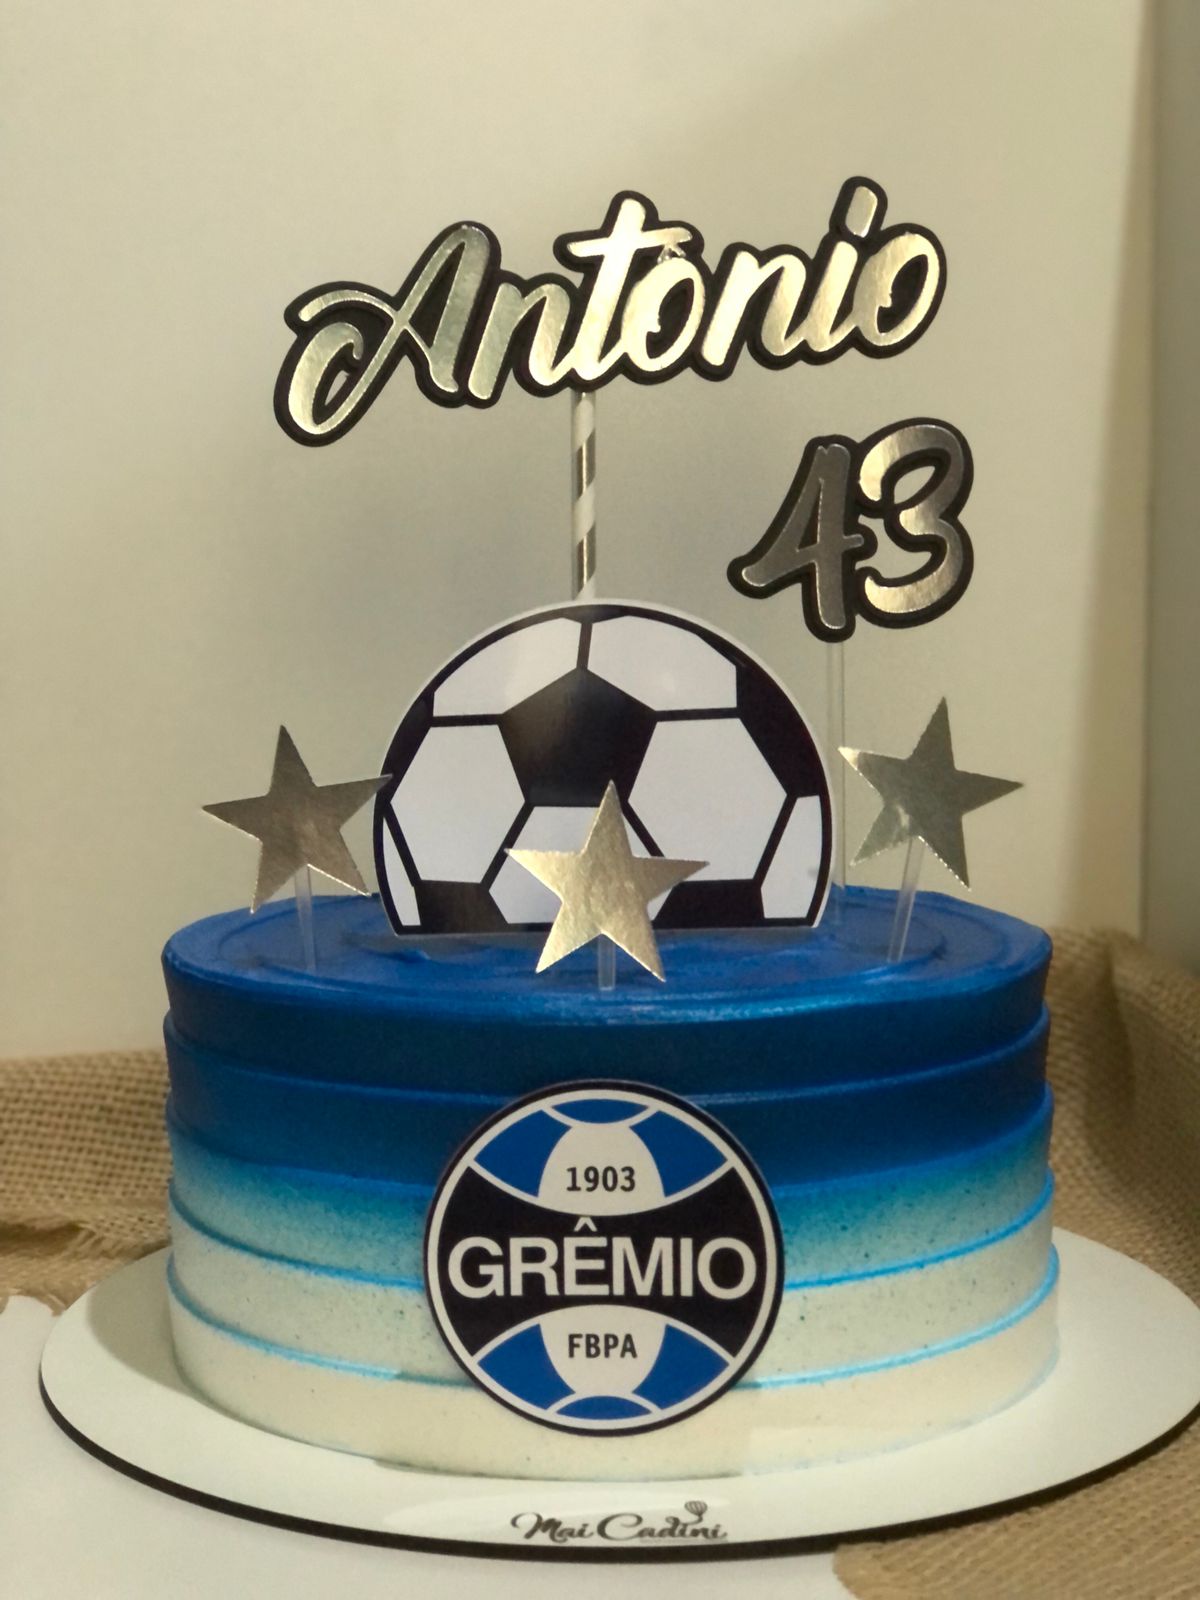 Gremio Decorated Cake